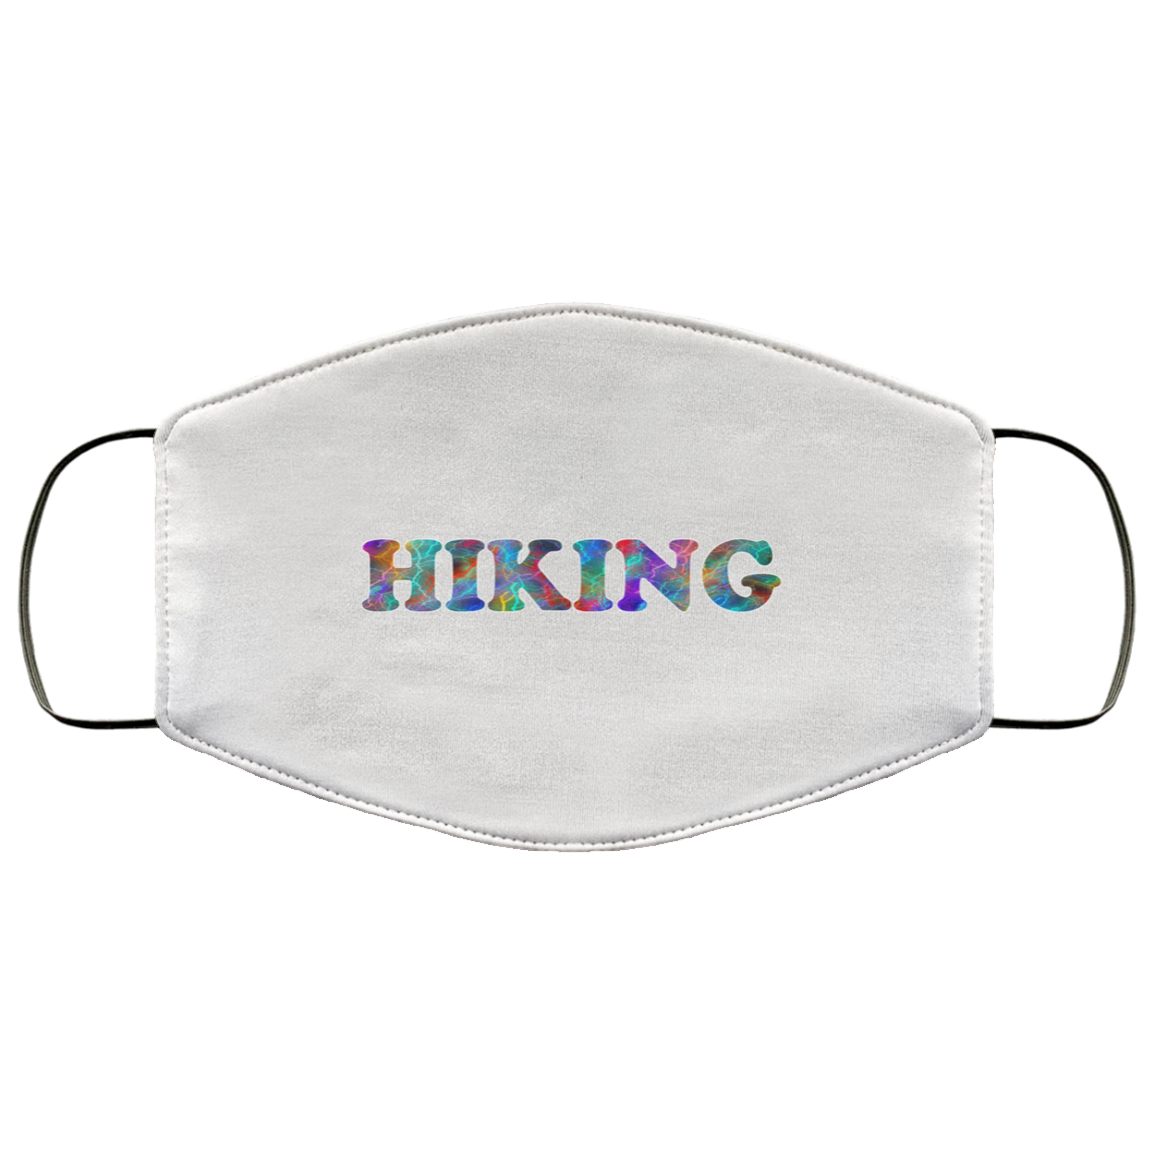 Hiking 2 Layer Protective Mask